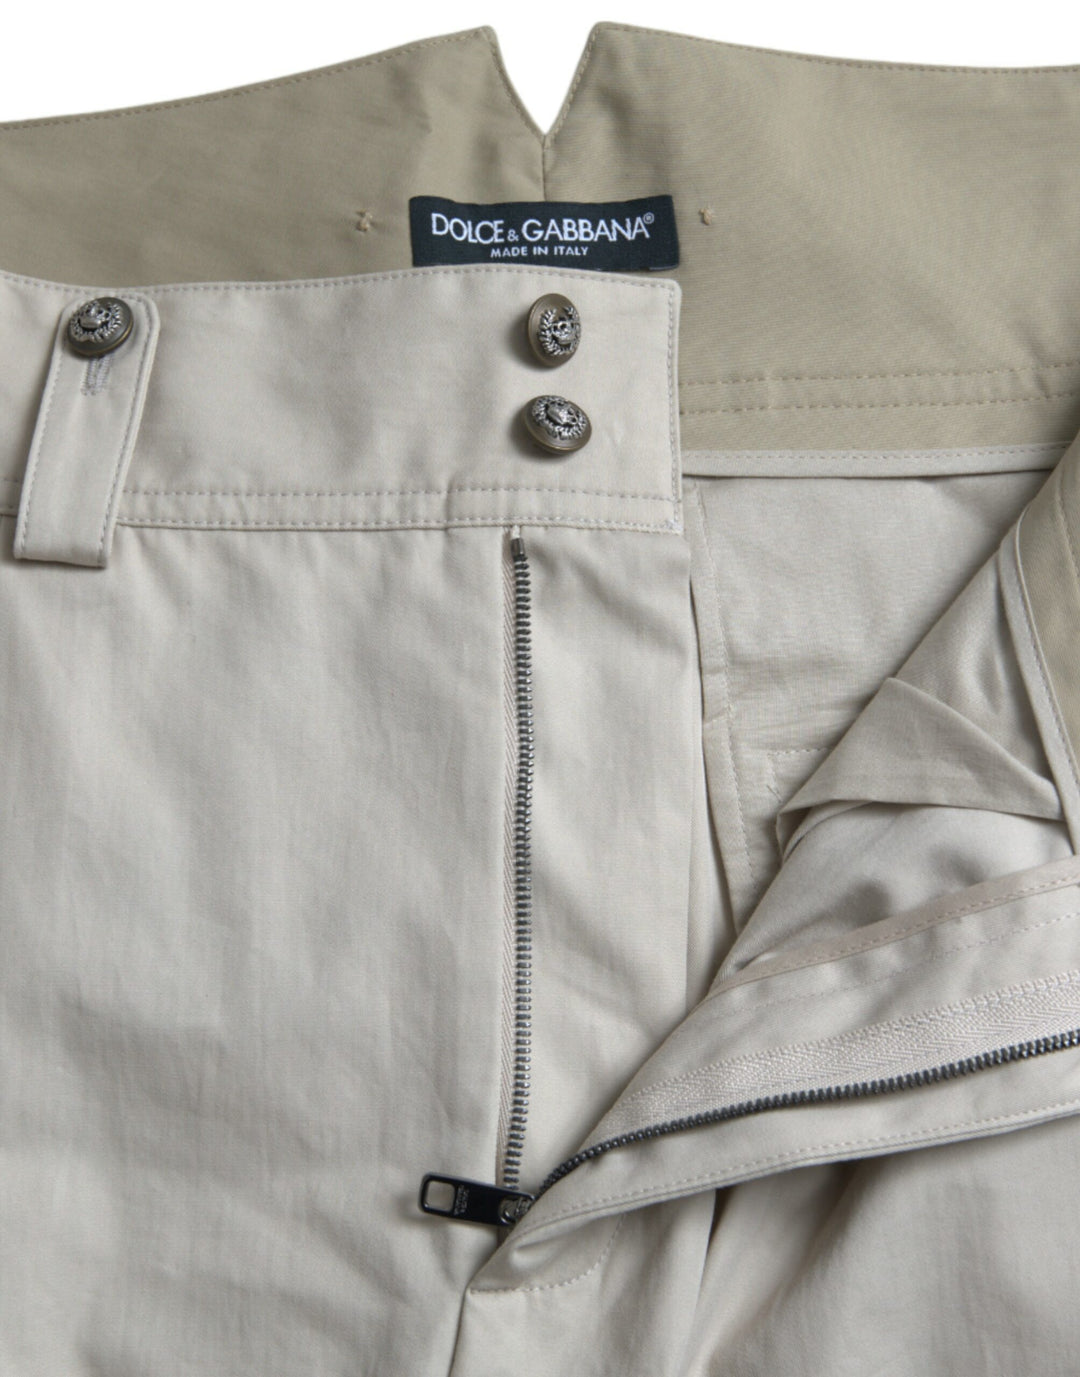 Dolce & Gabbana Beige Cotton High Waist Tapered Pants